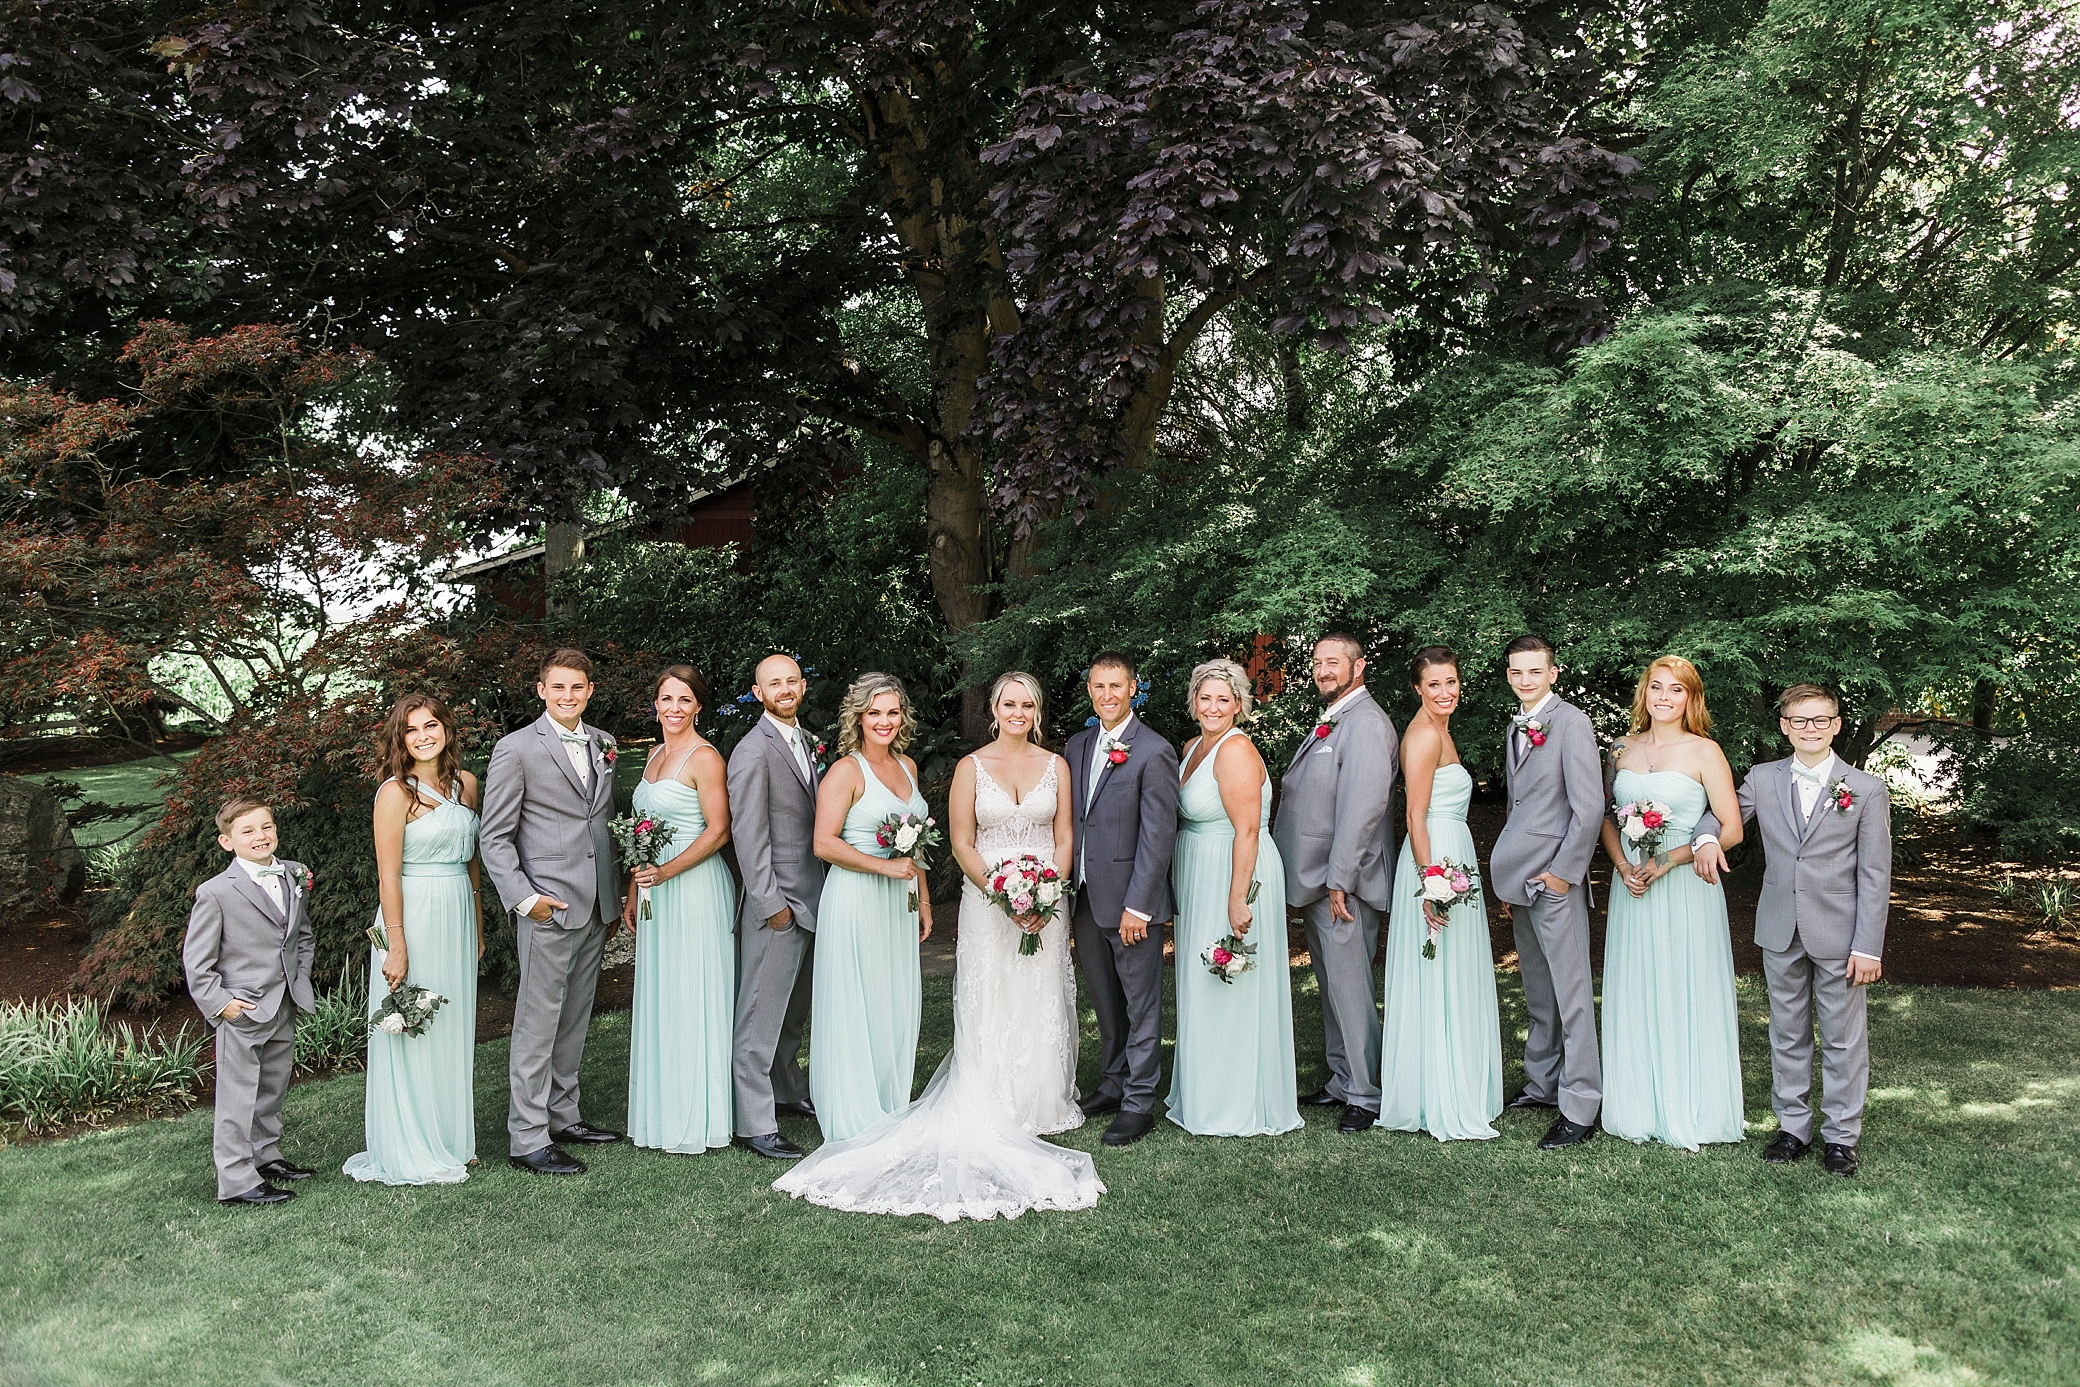 Wedding party photo at Mount Vernon Wedding Venue - Maplehurst Farms. Photographed by PNW Wedding Photographer, Megan Montalvo Photography. 